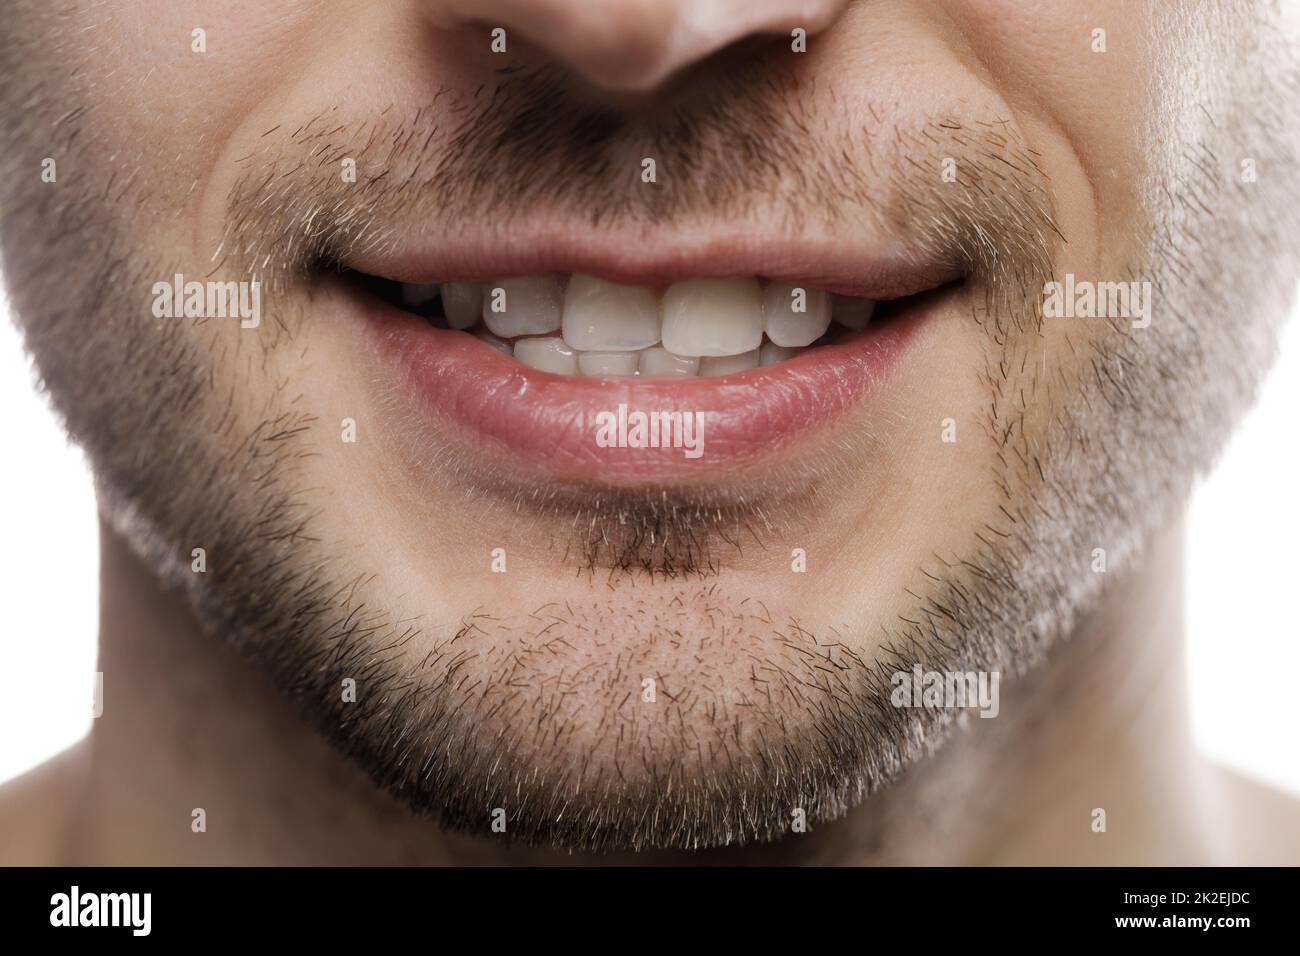 Cerca de la boca masculina con asmile Foto de stock